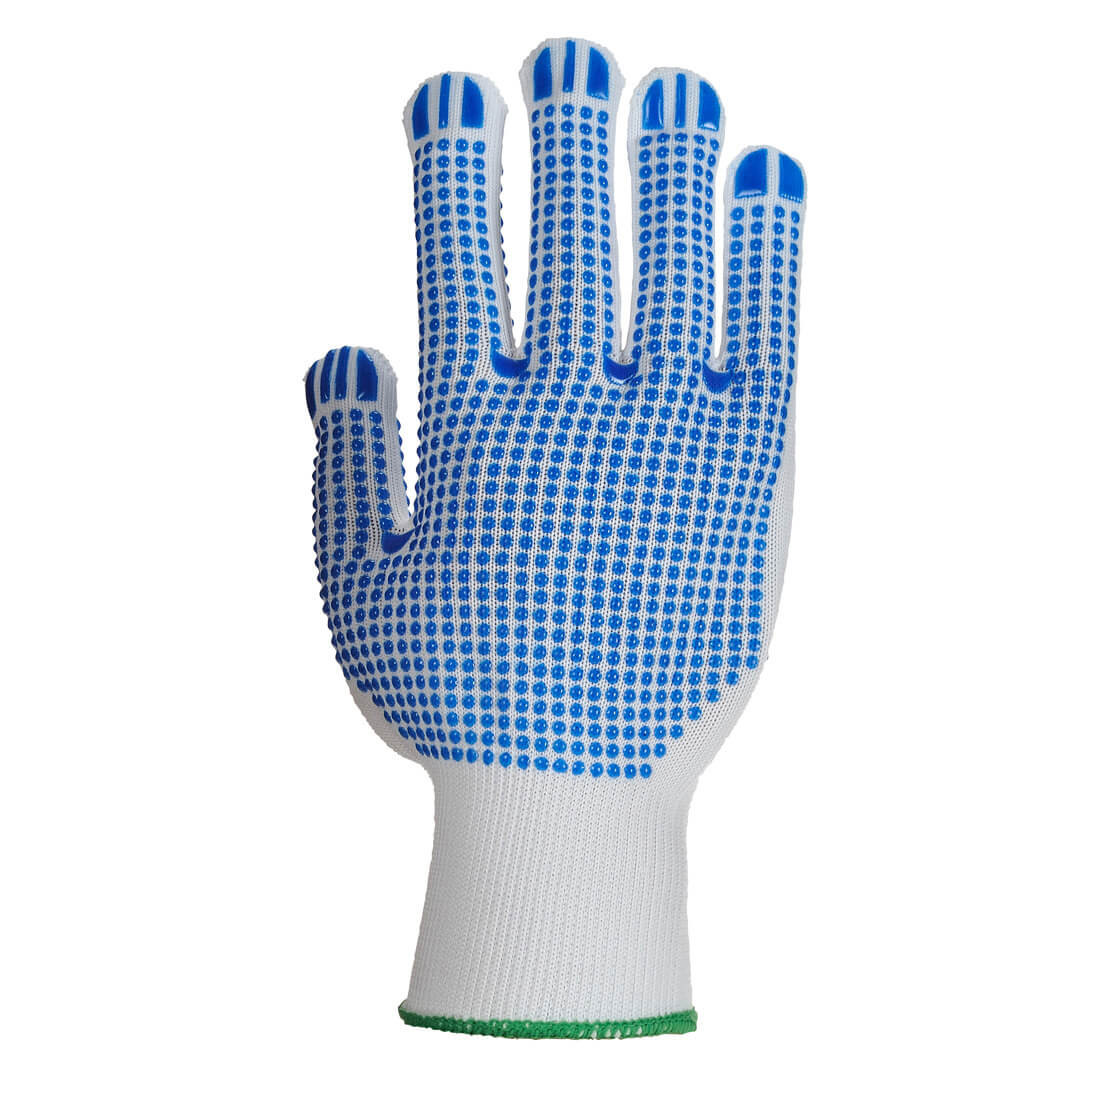 Polka Dot Plus Glove - Personal protection